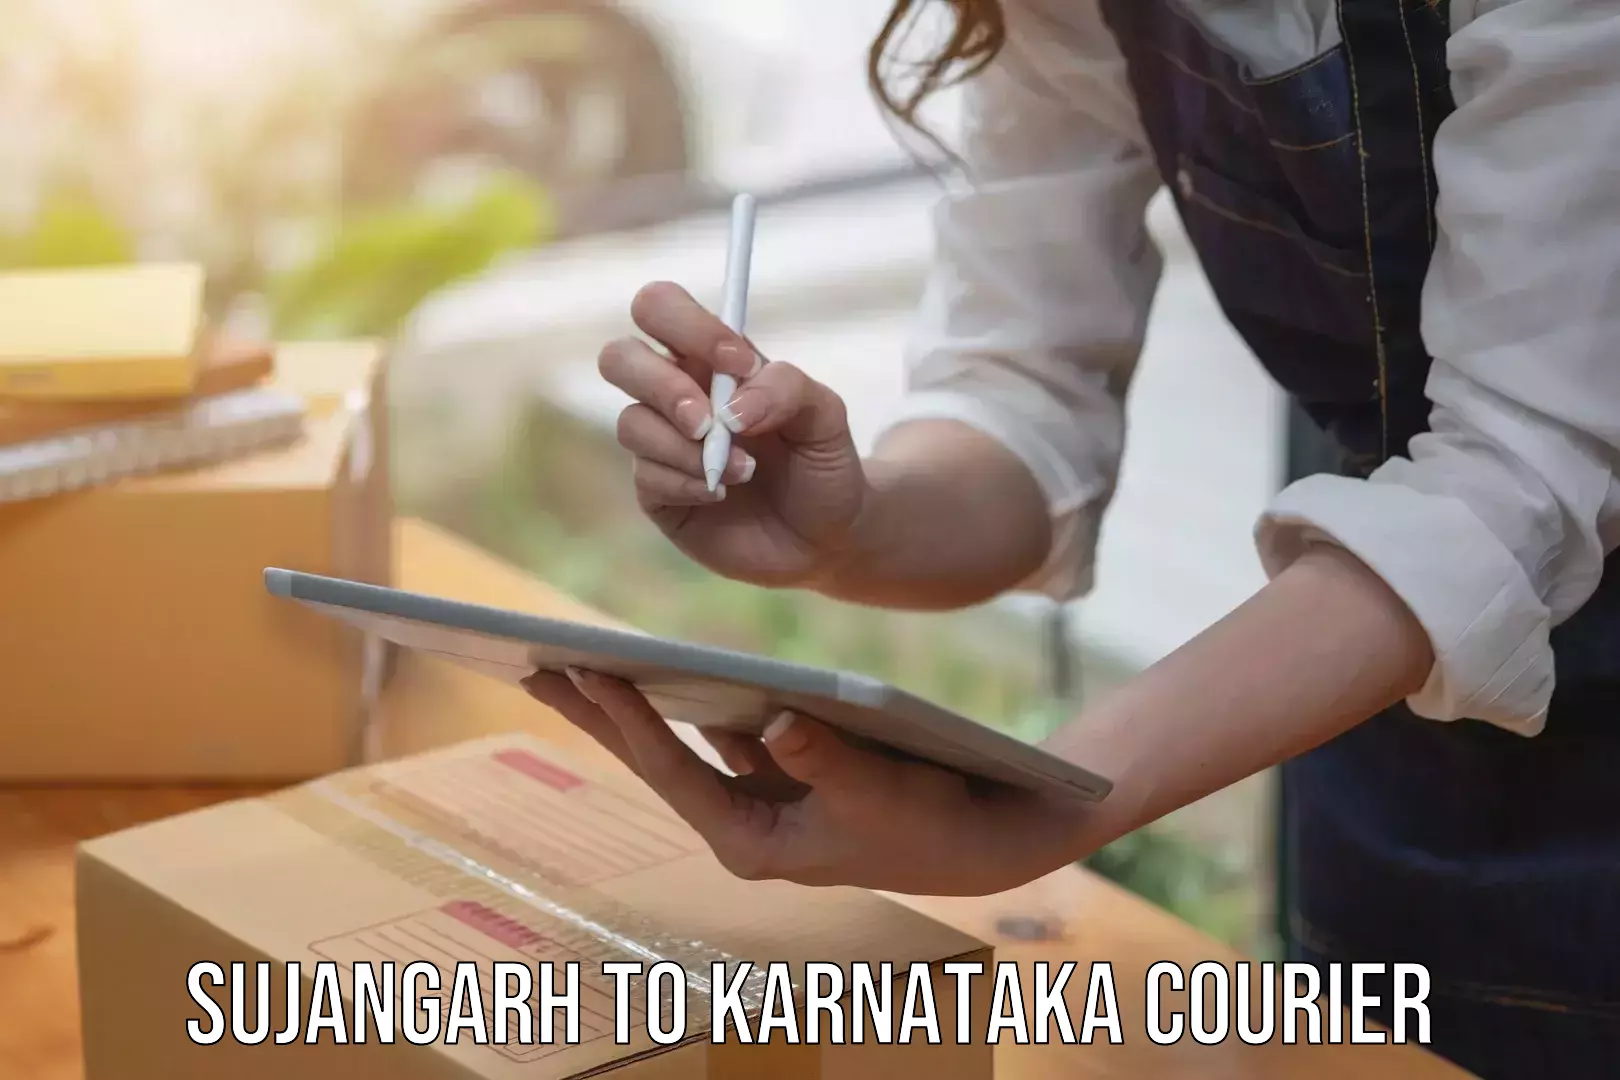 Professional courier handling Sujangarh to Yadgiri